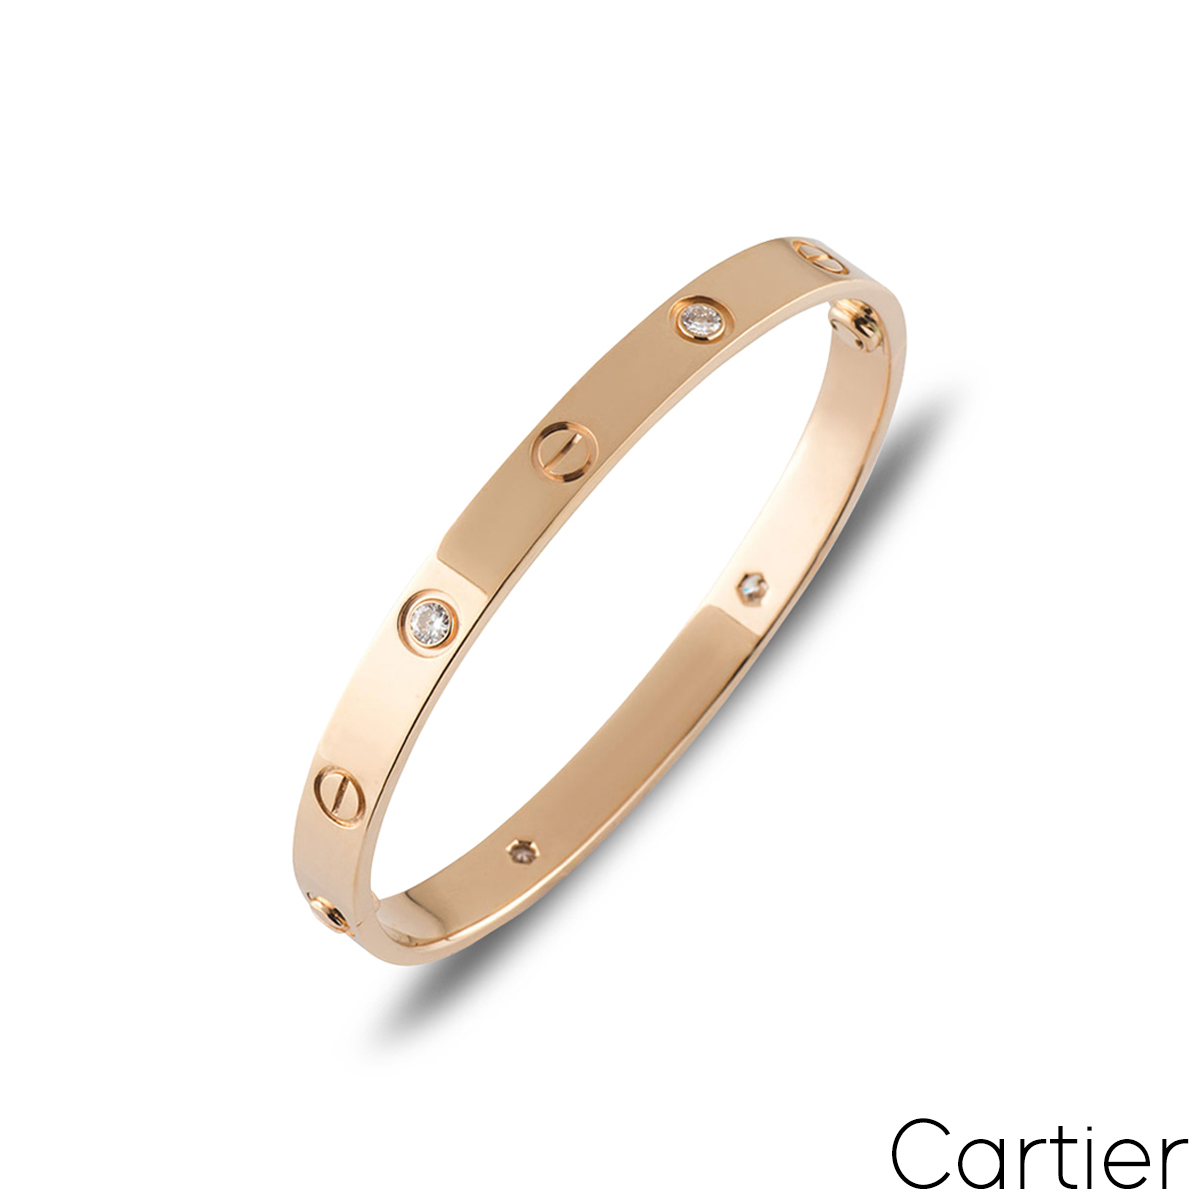 cartier bracelet second hand uk